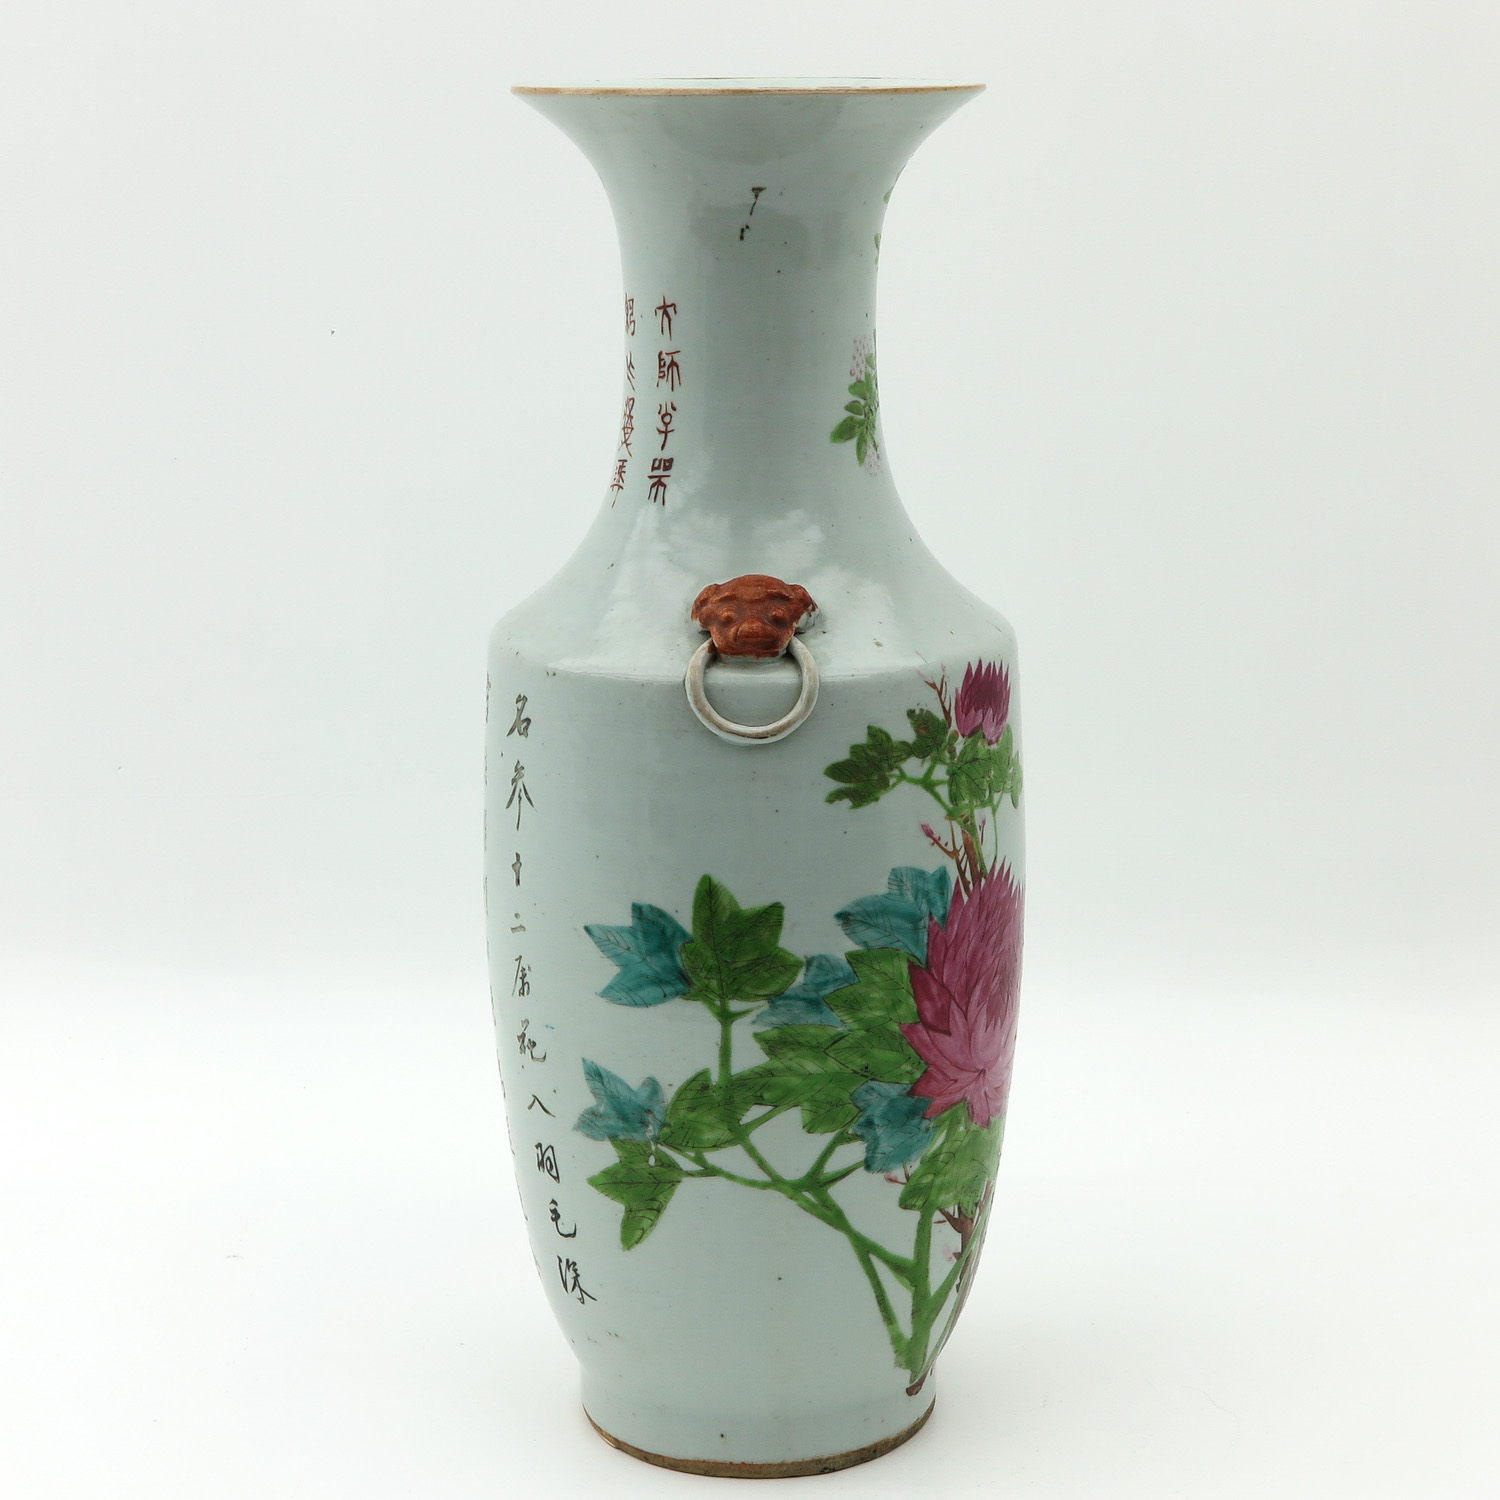 A Polychrome Decor Vase - Image 4 of 9